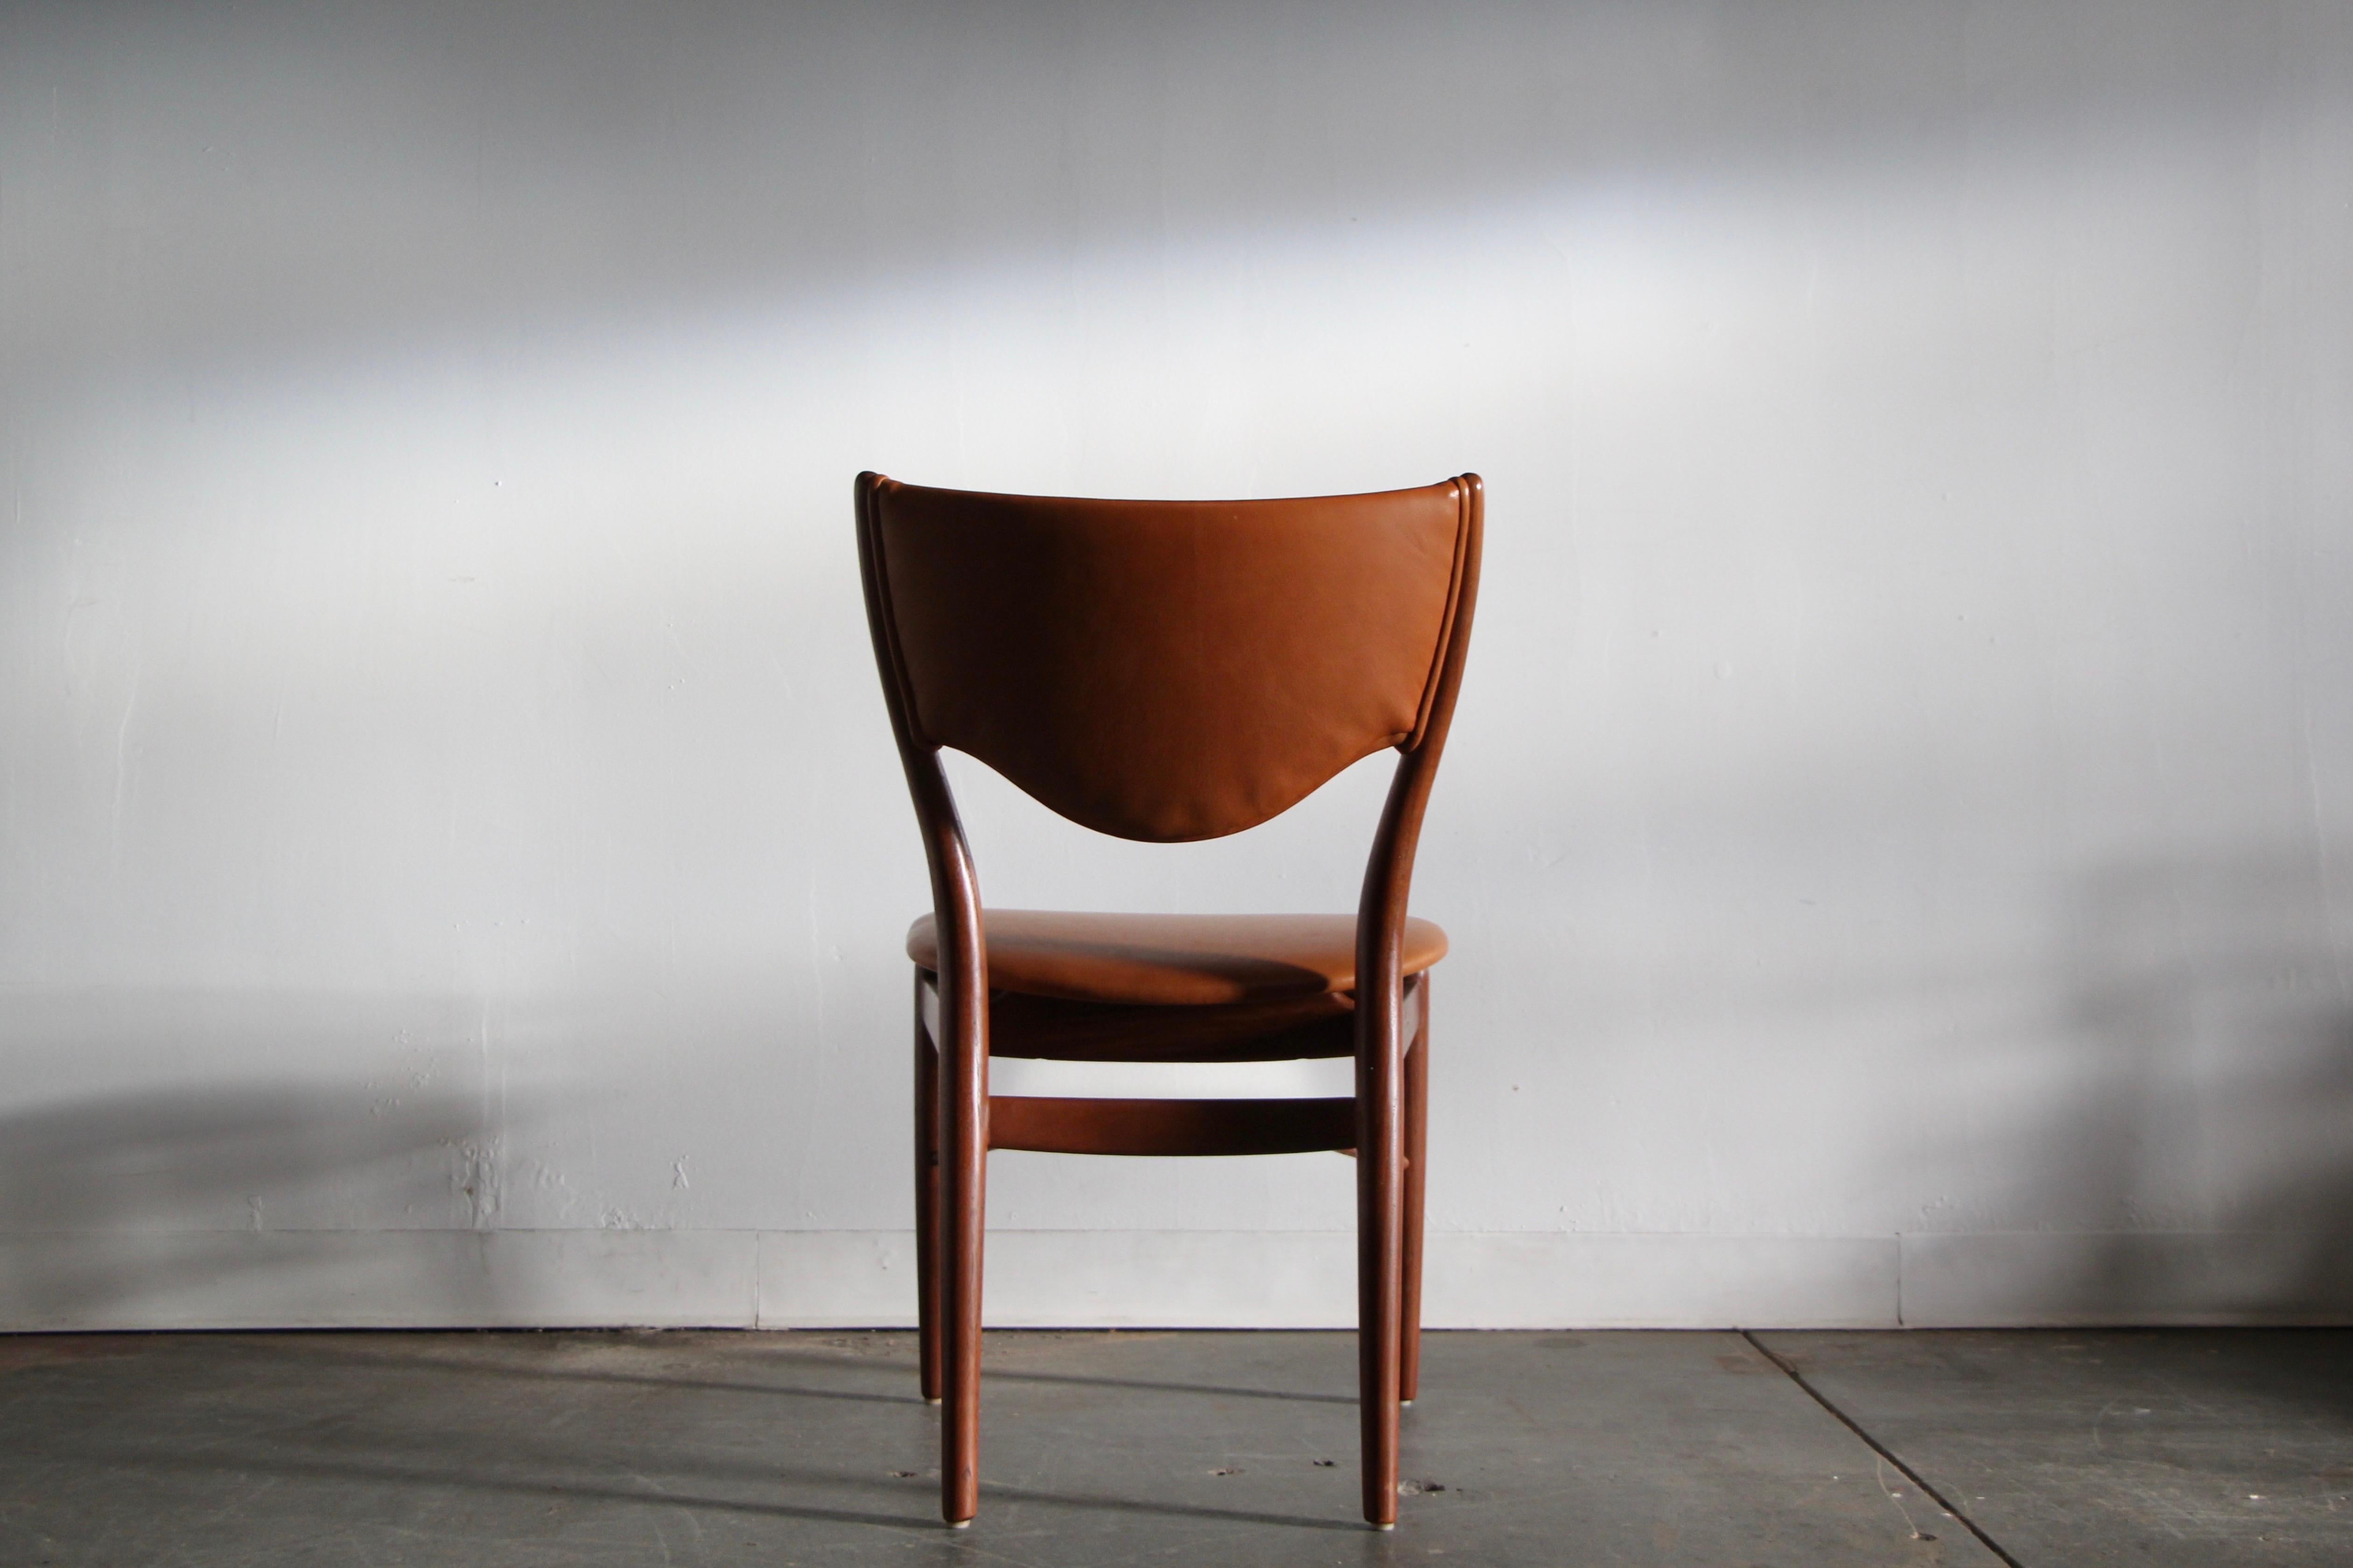 Finn Juhl “BO 63” Sculpted Teak Dining Chairs in Cognac Goatskin Leather, 1950s For Sale 1